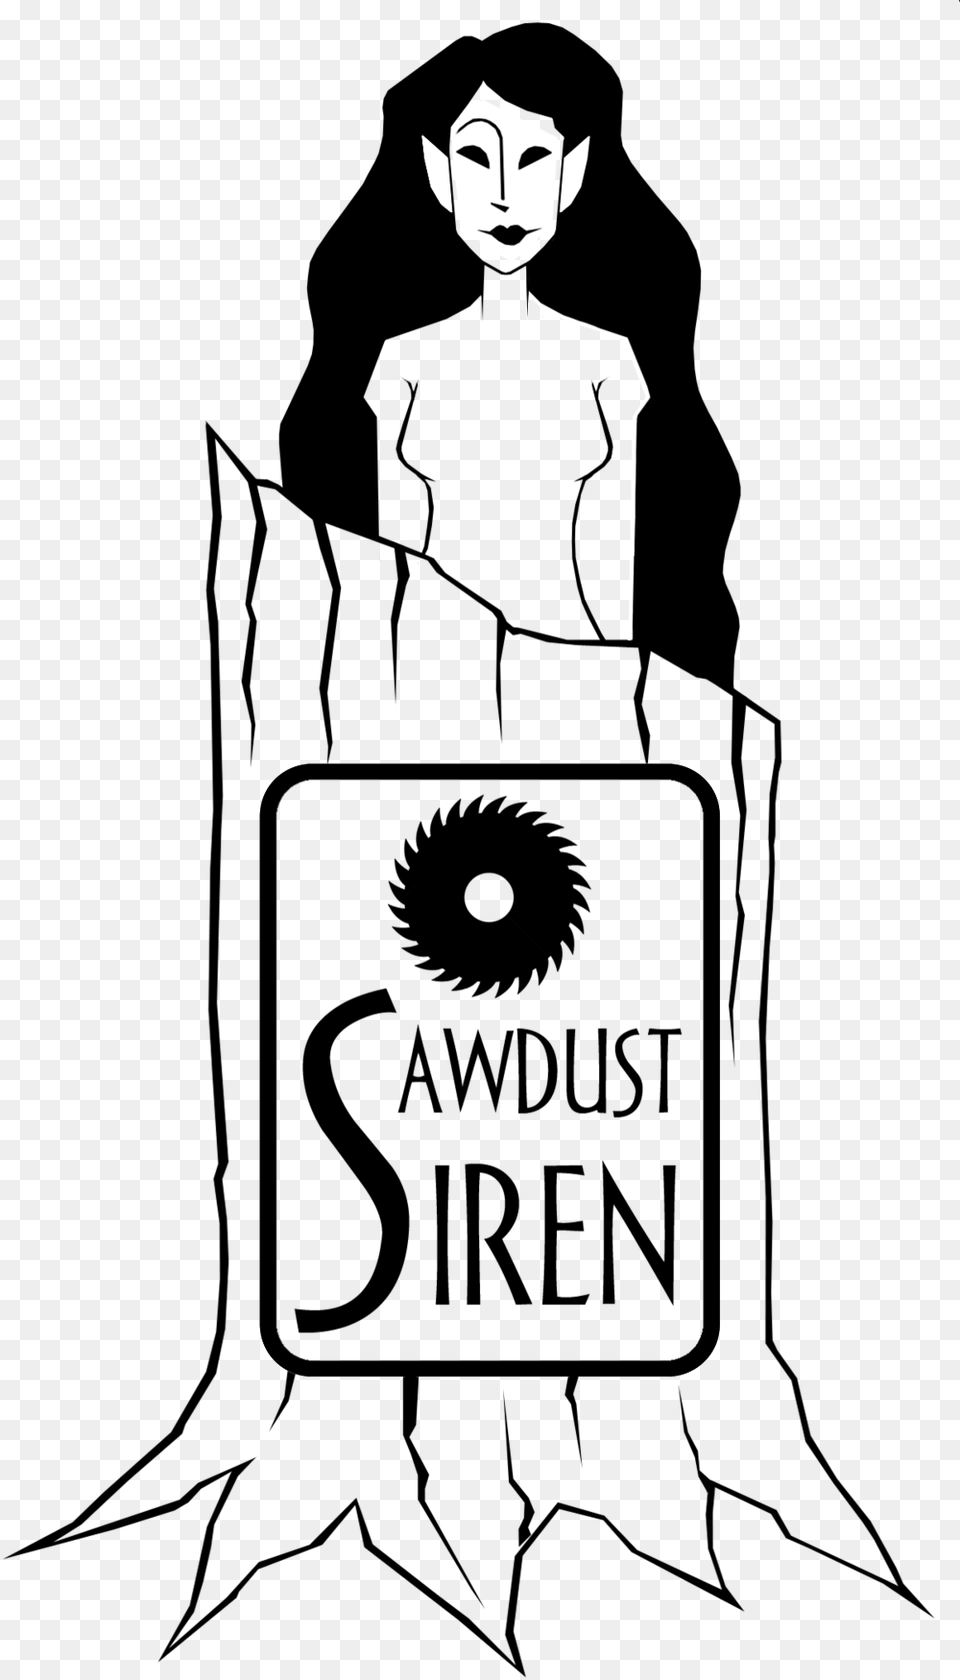 Sawdust Siren Bark Final Illustration, Stencil, Face, Head, Person Png